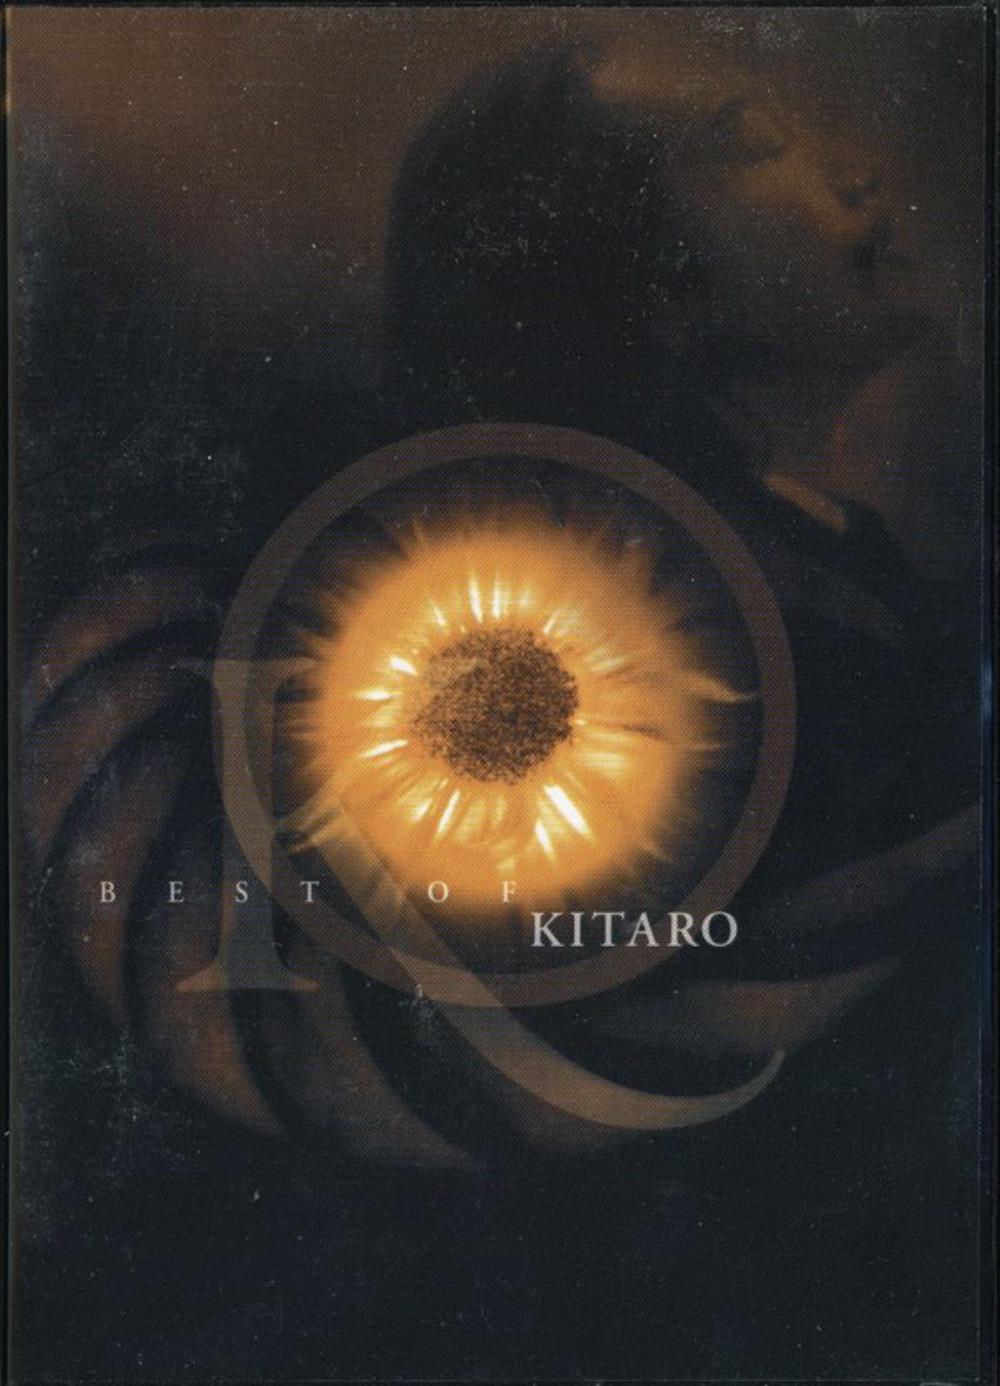 Kitaro The Best of Kitaro album cover